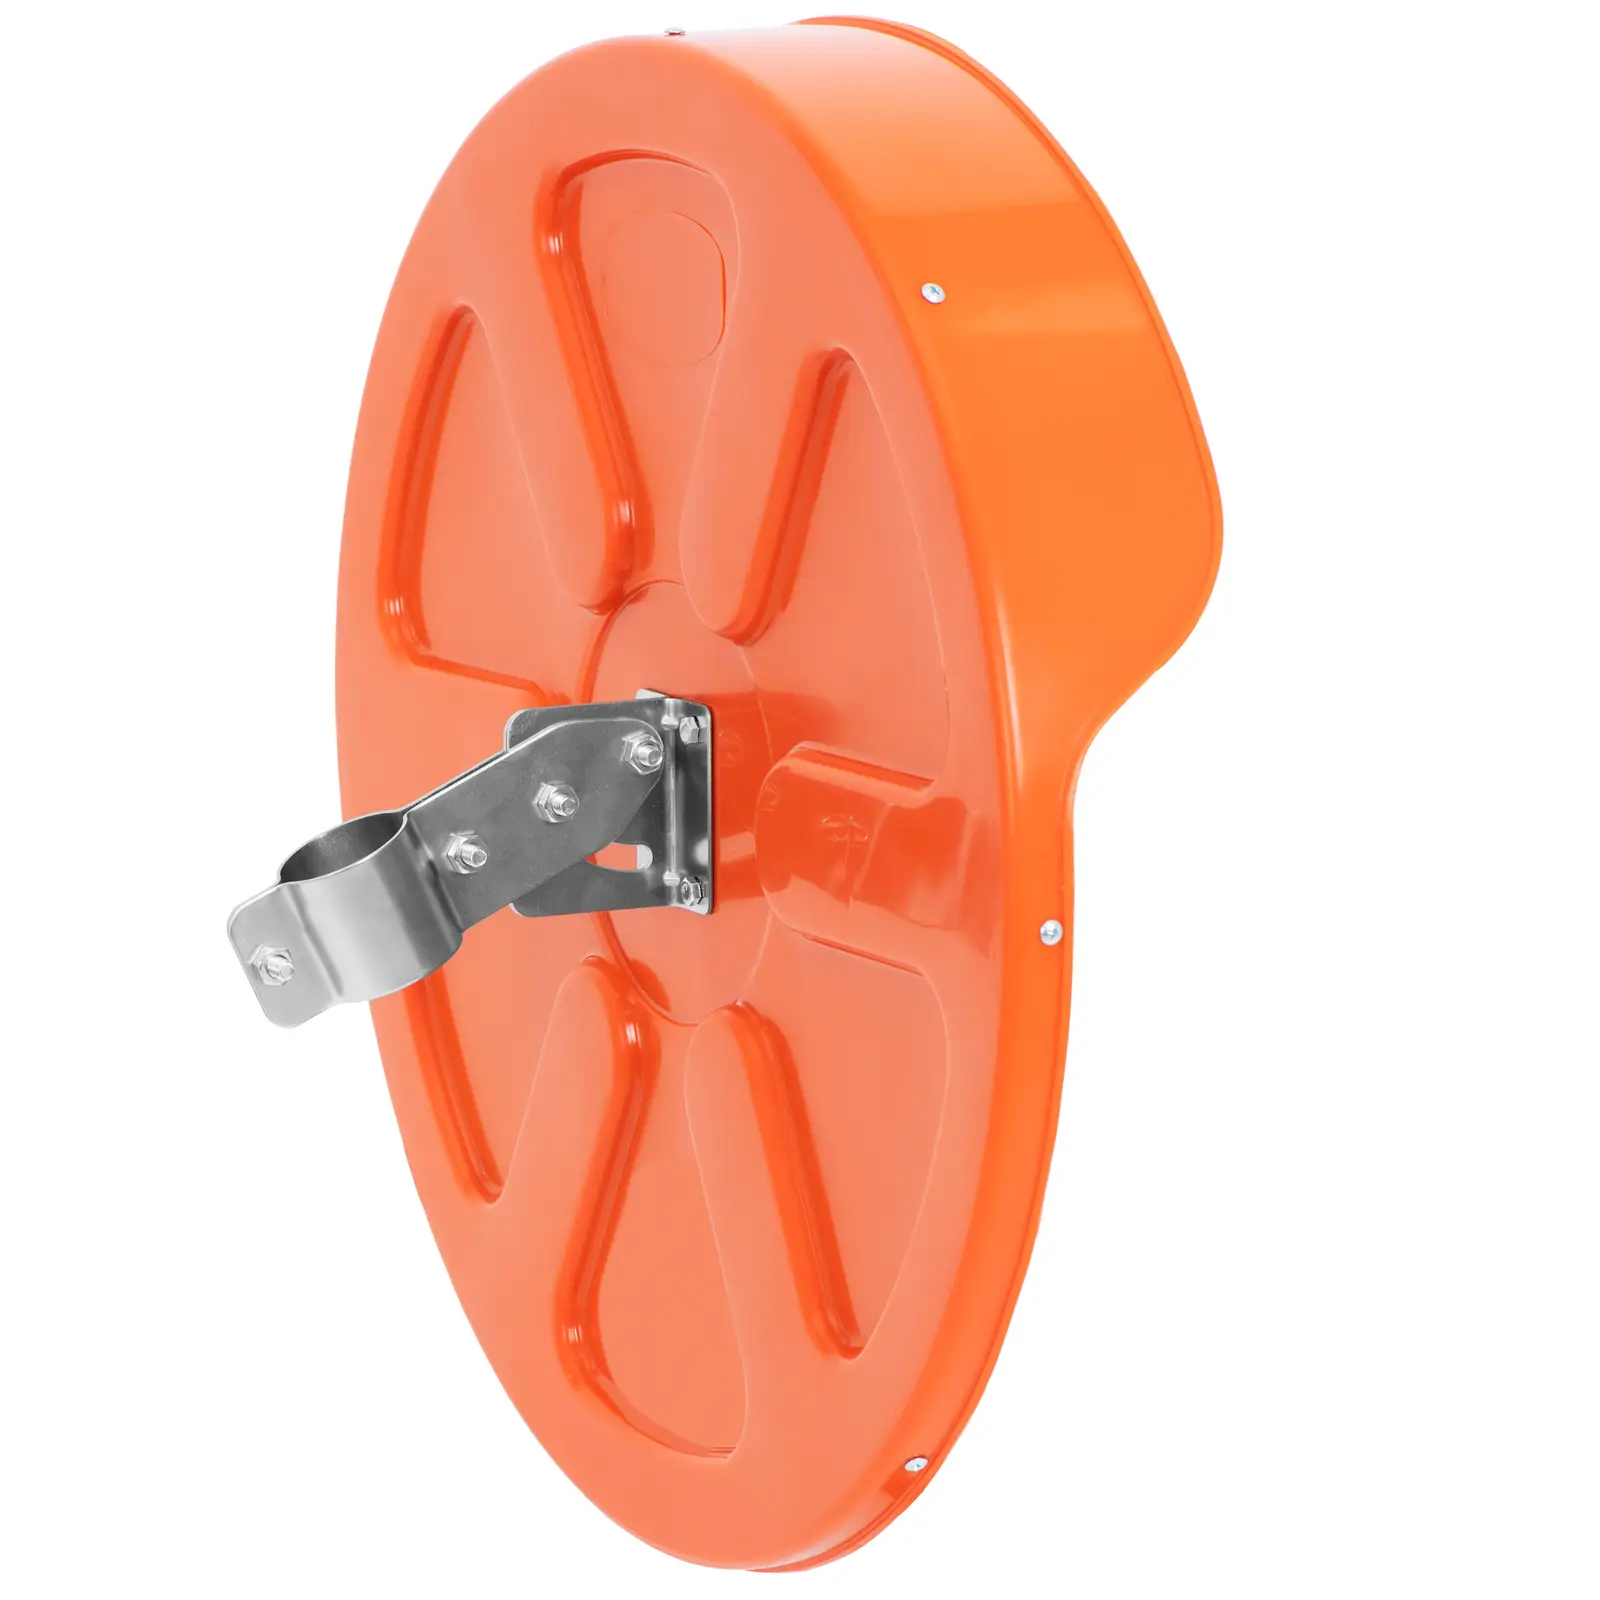 Trafikspejl - 60 cm i diameter - 130° - rundt - orange